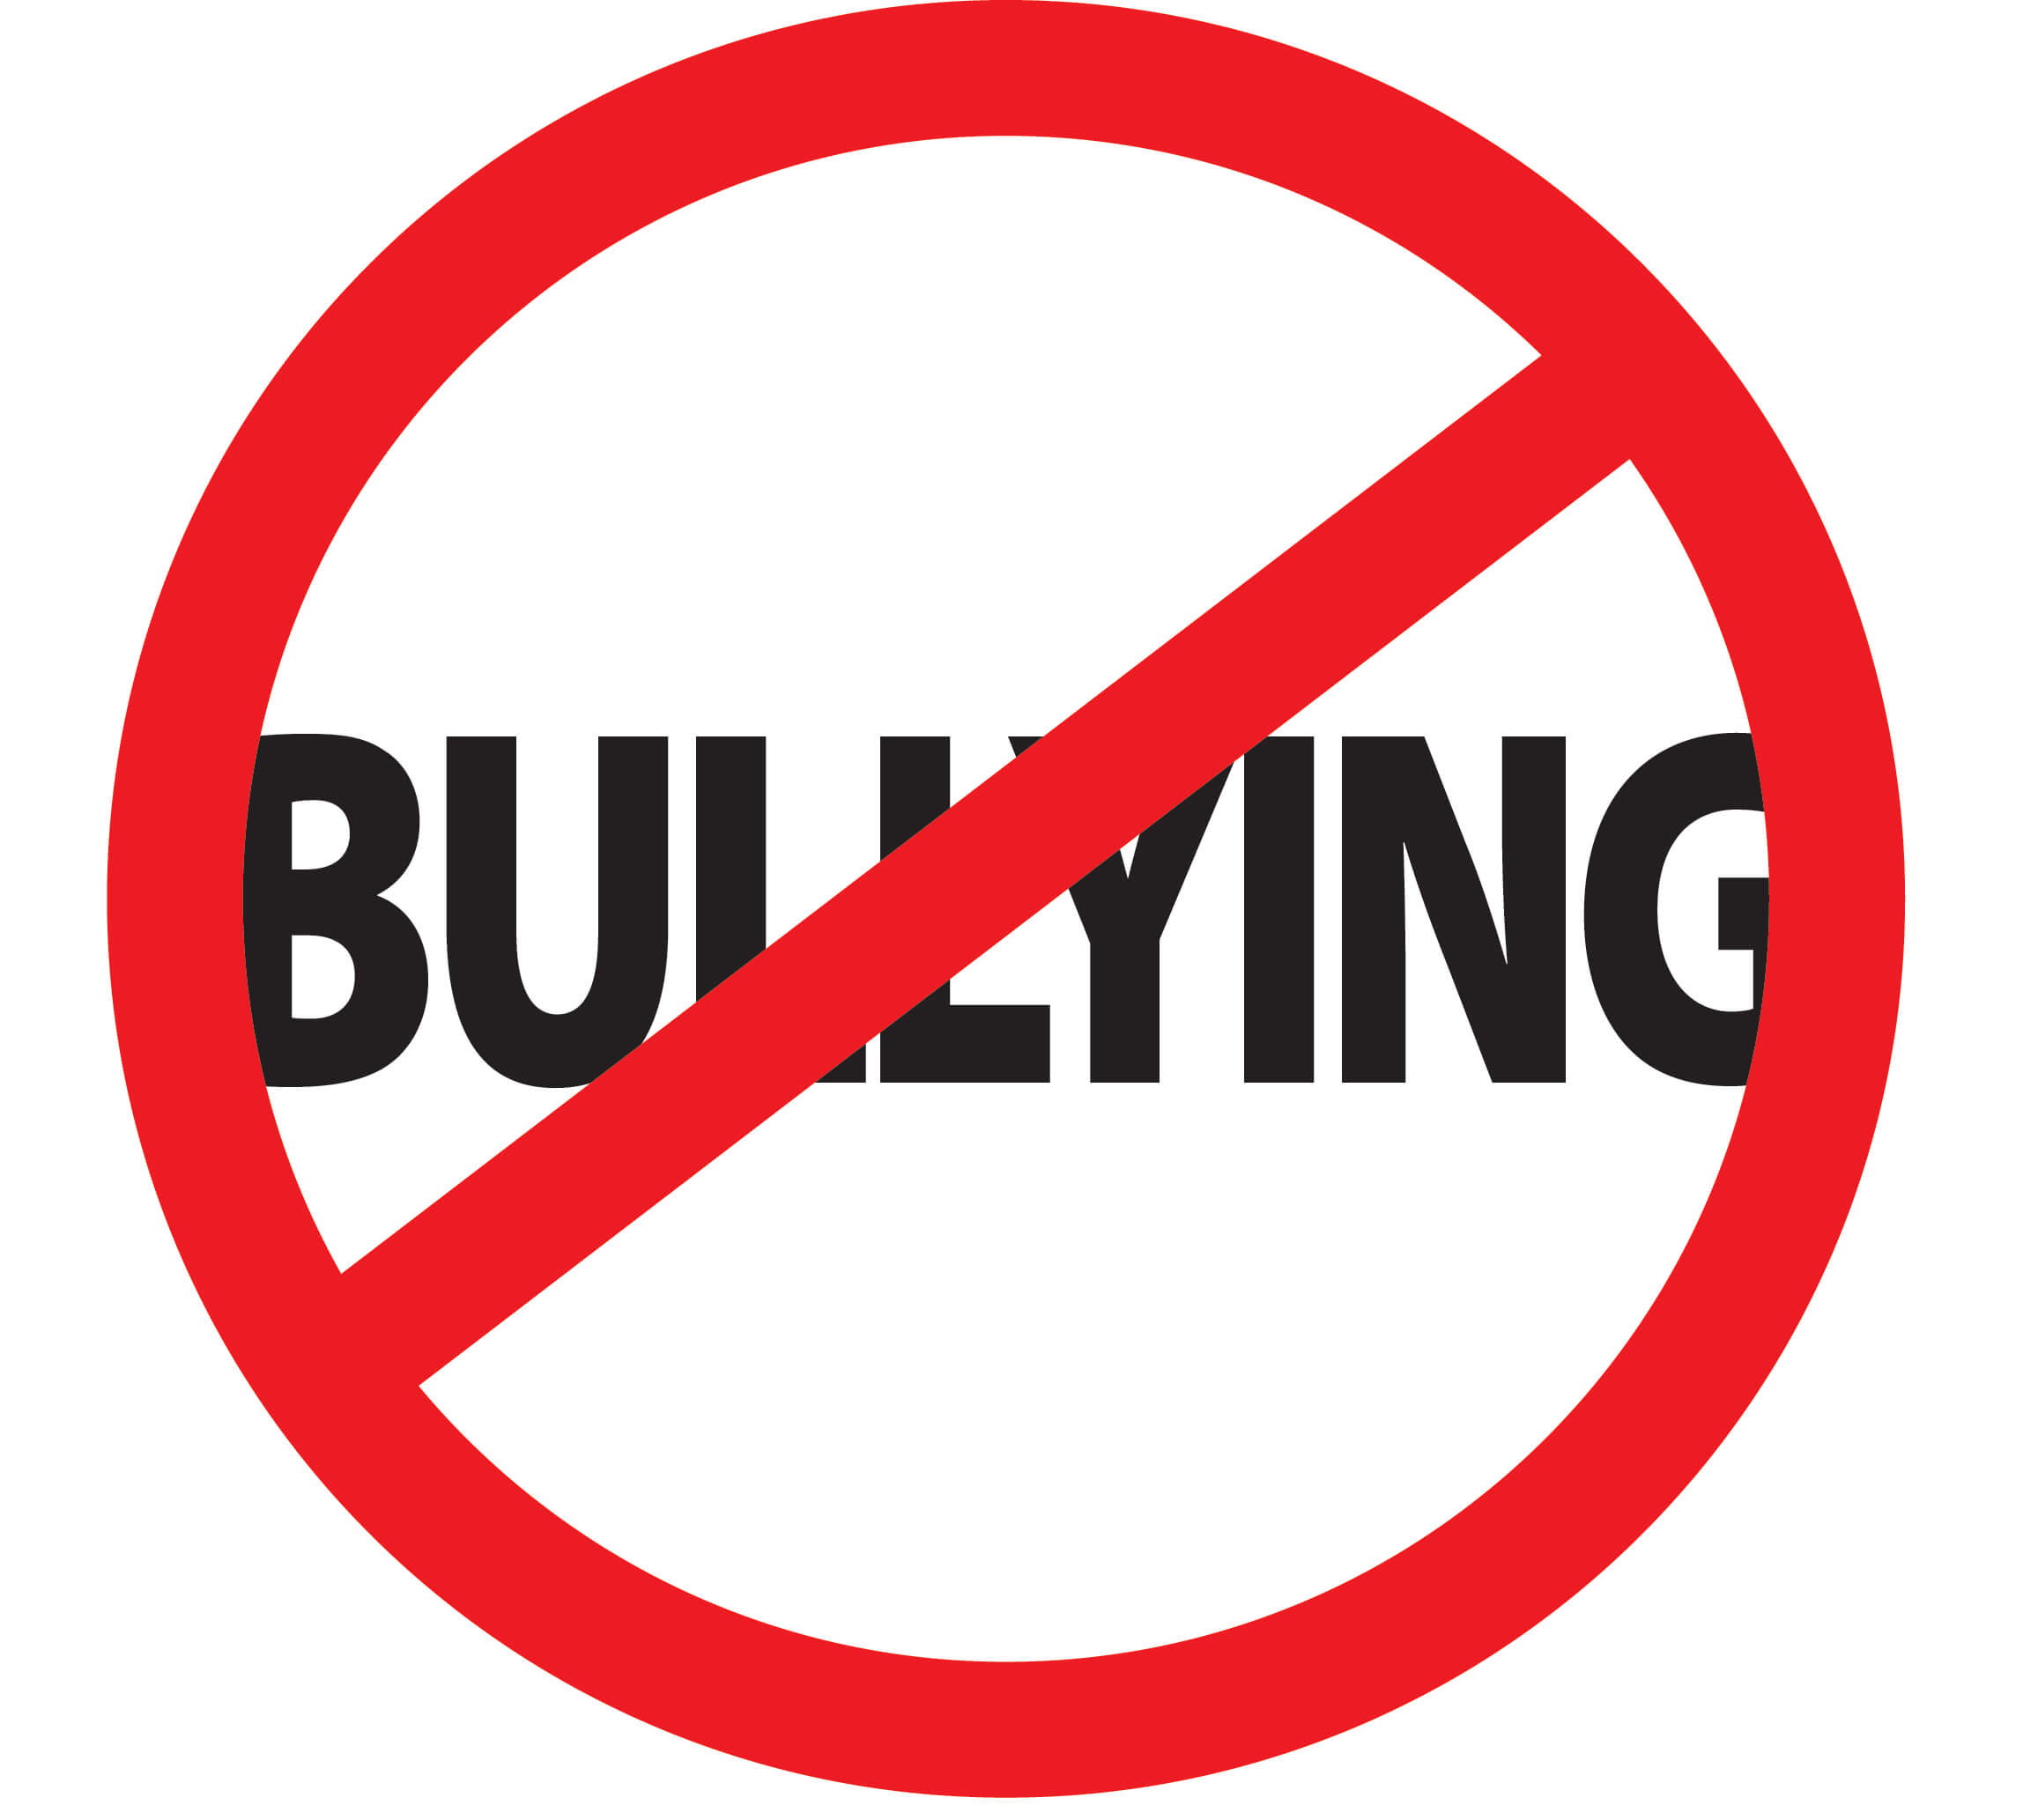 Stop Bullying Training Sign